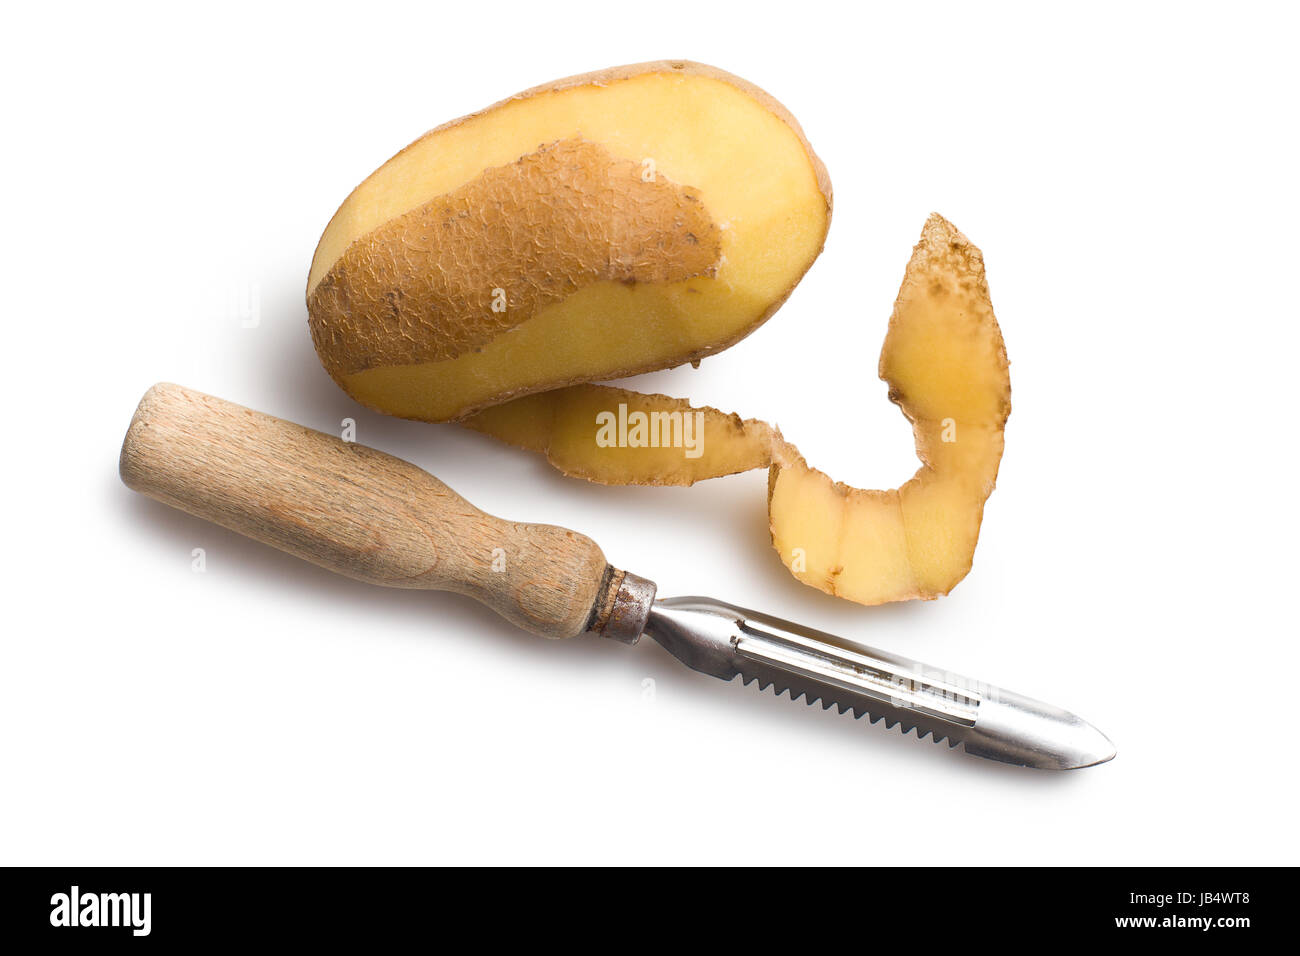 https://c8.alamy.com/comp/JB4WT8/peeled-potato-with-old-potato-peeler-on-white-background-JB4WT8.jpg